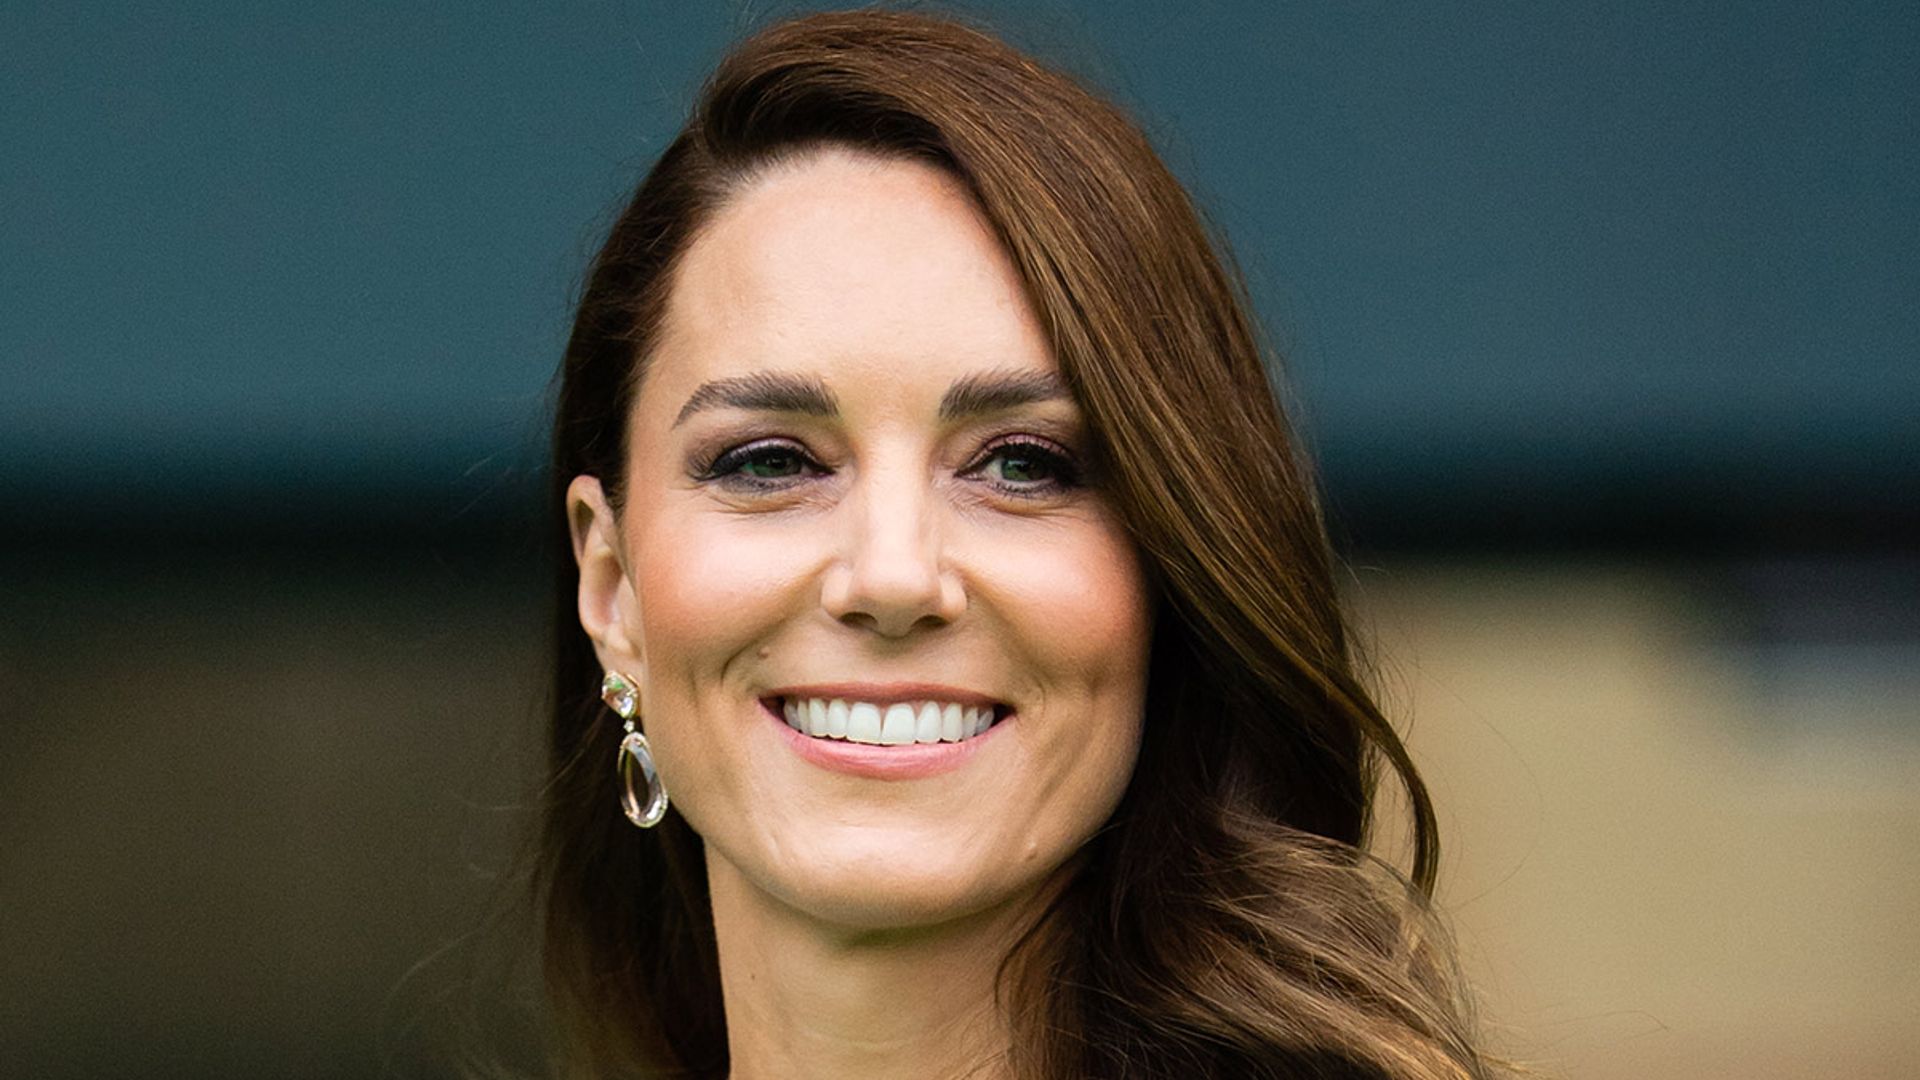 Kate Middleton's laminated brow transformation revealed